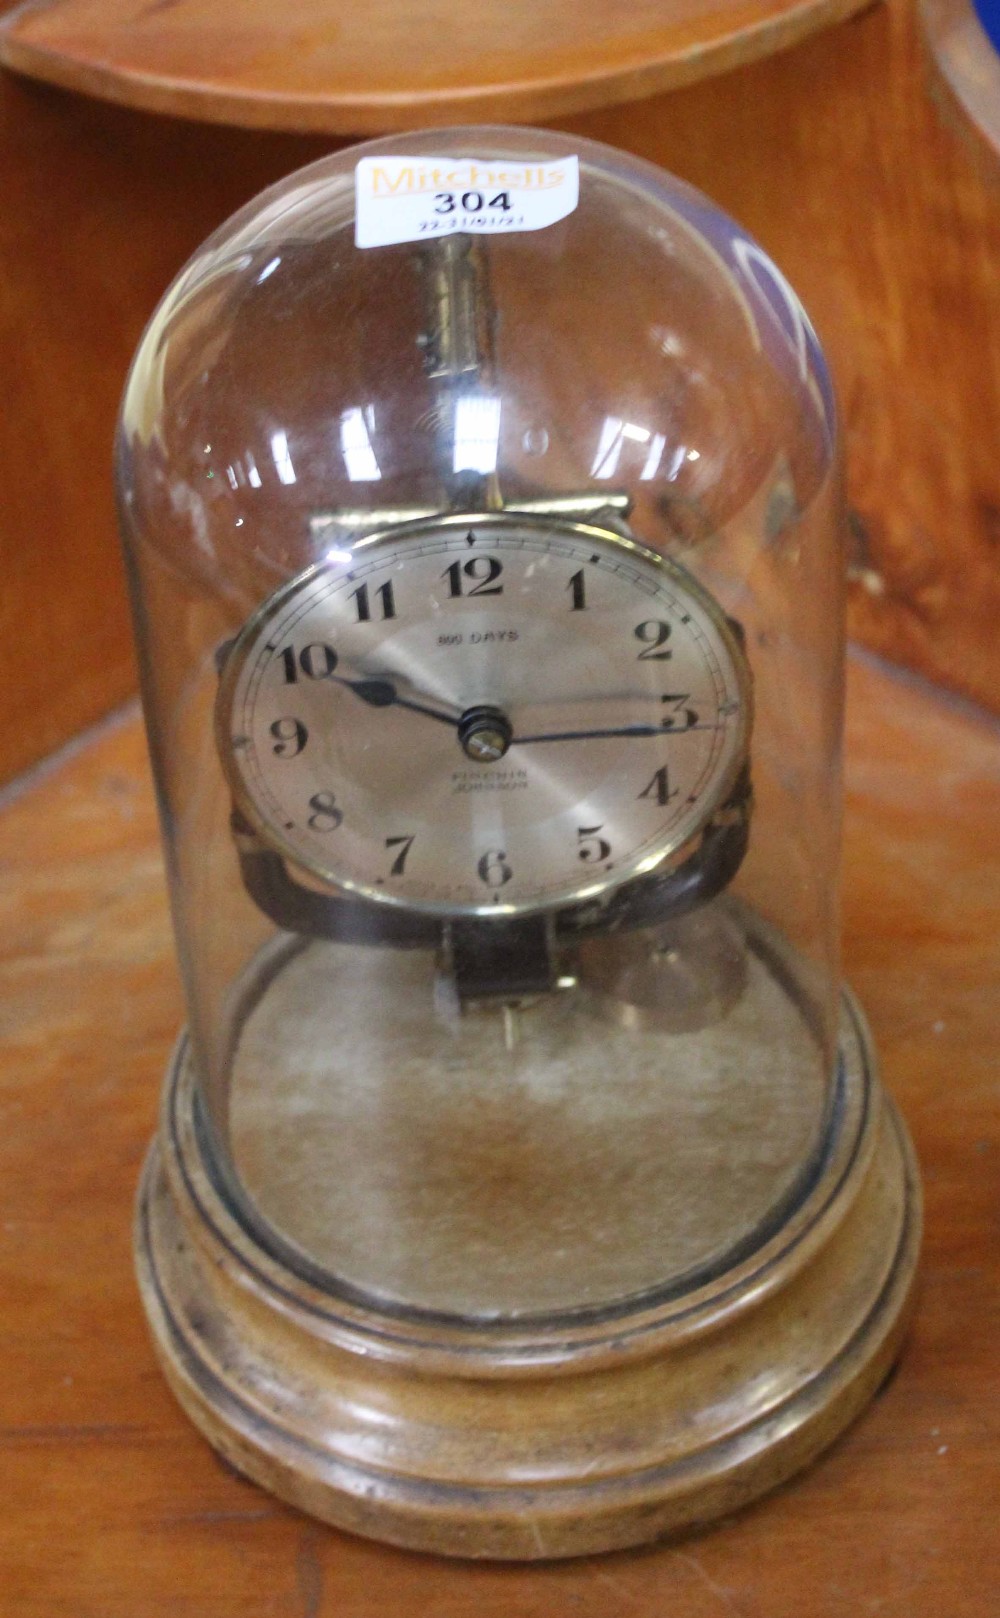 A pinchin Johnson 800 day mantle clock,